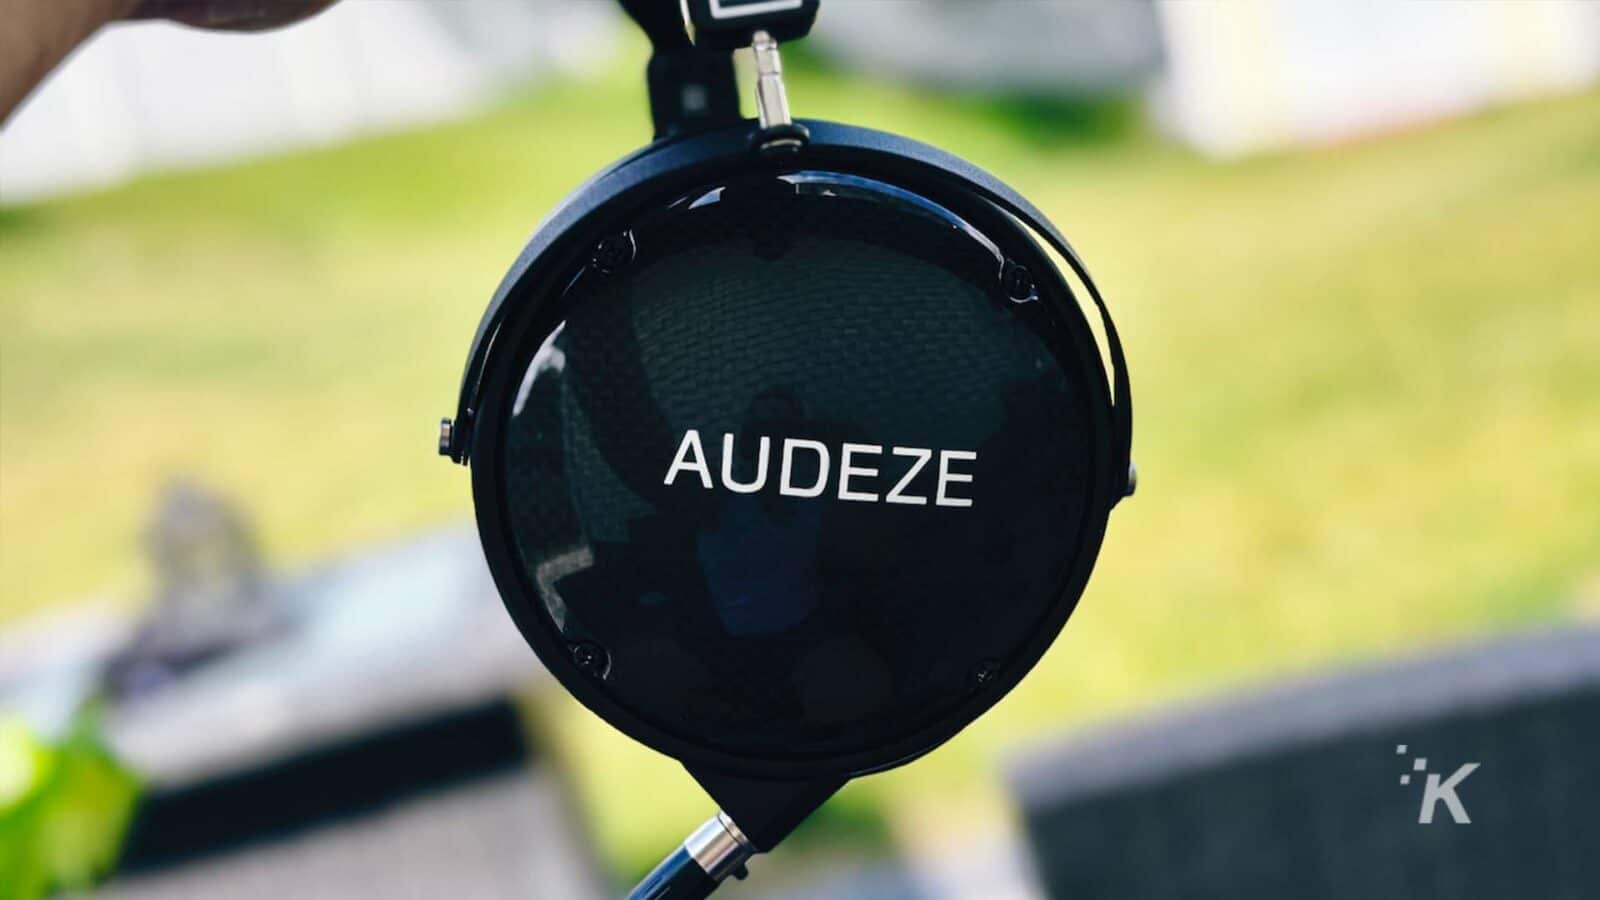 The close-up of the Audeze headphones